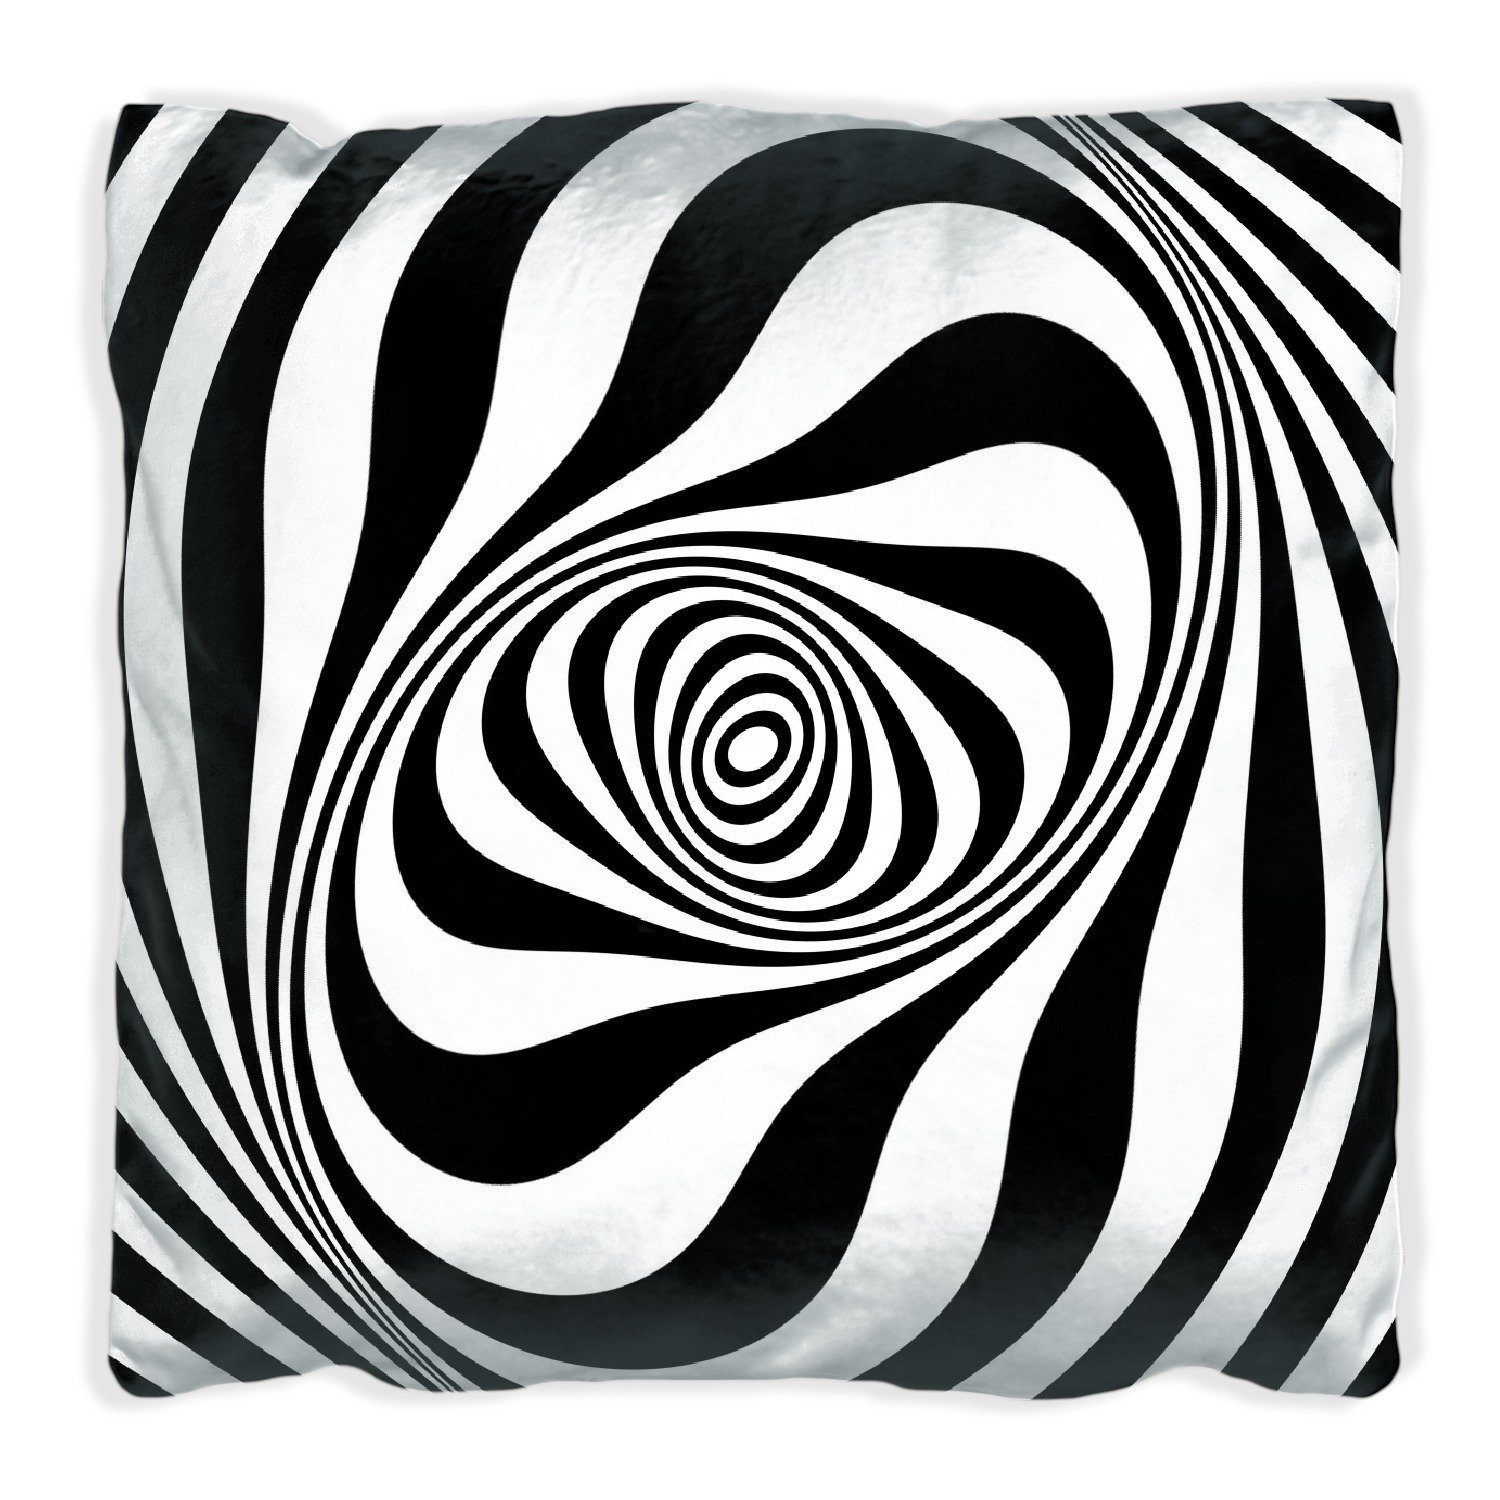 Wallario Dekokissen Optische Täuschung - Zebra Muster - schwarz weiß, handgenäht